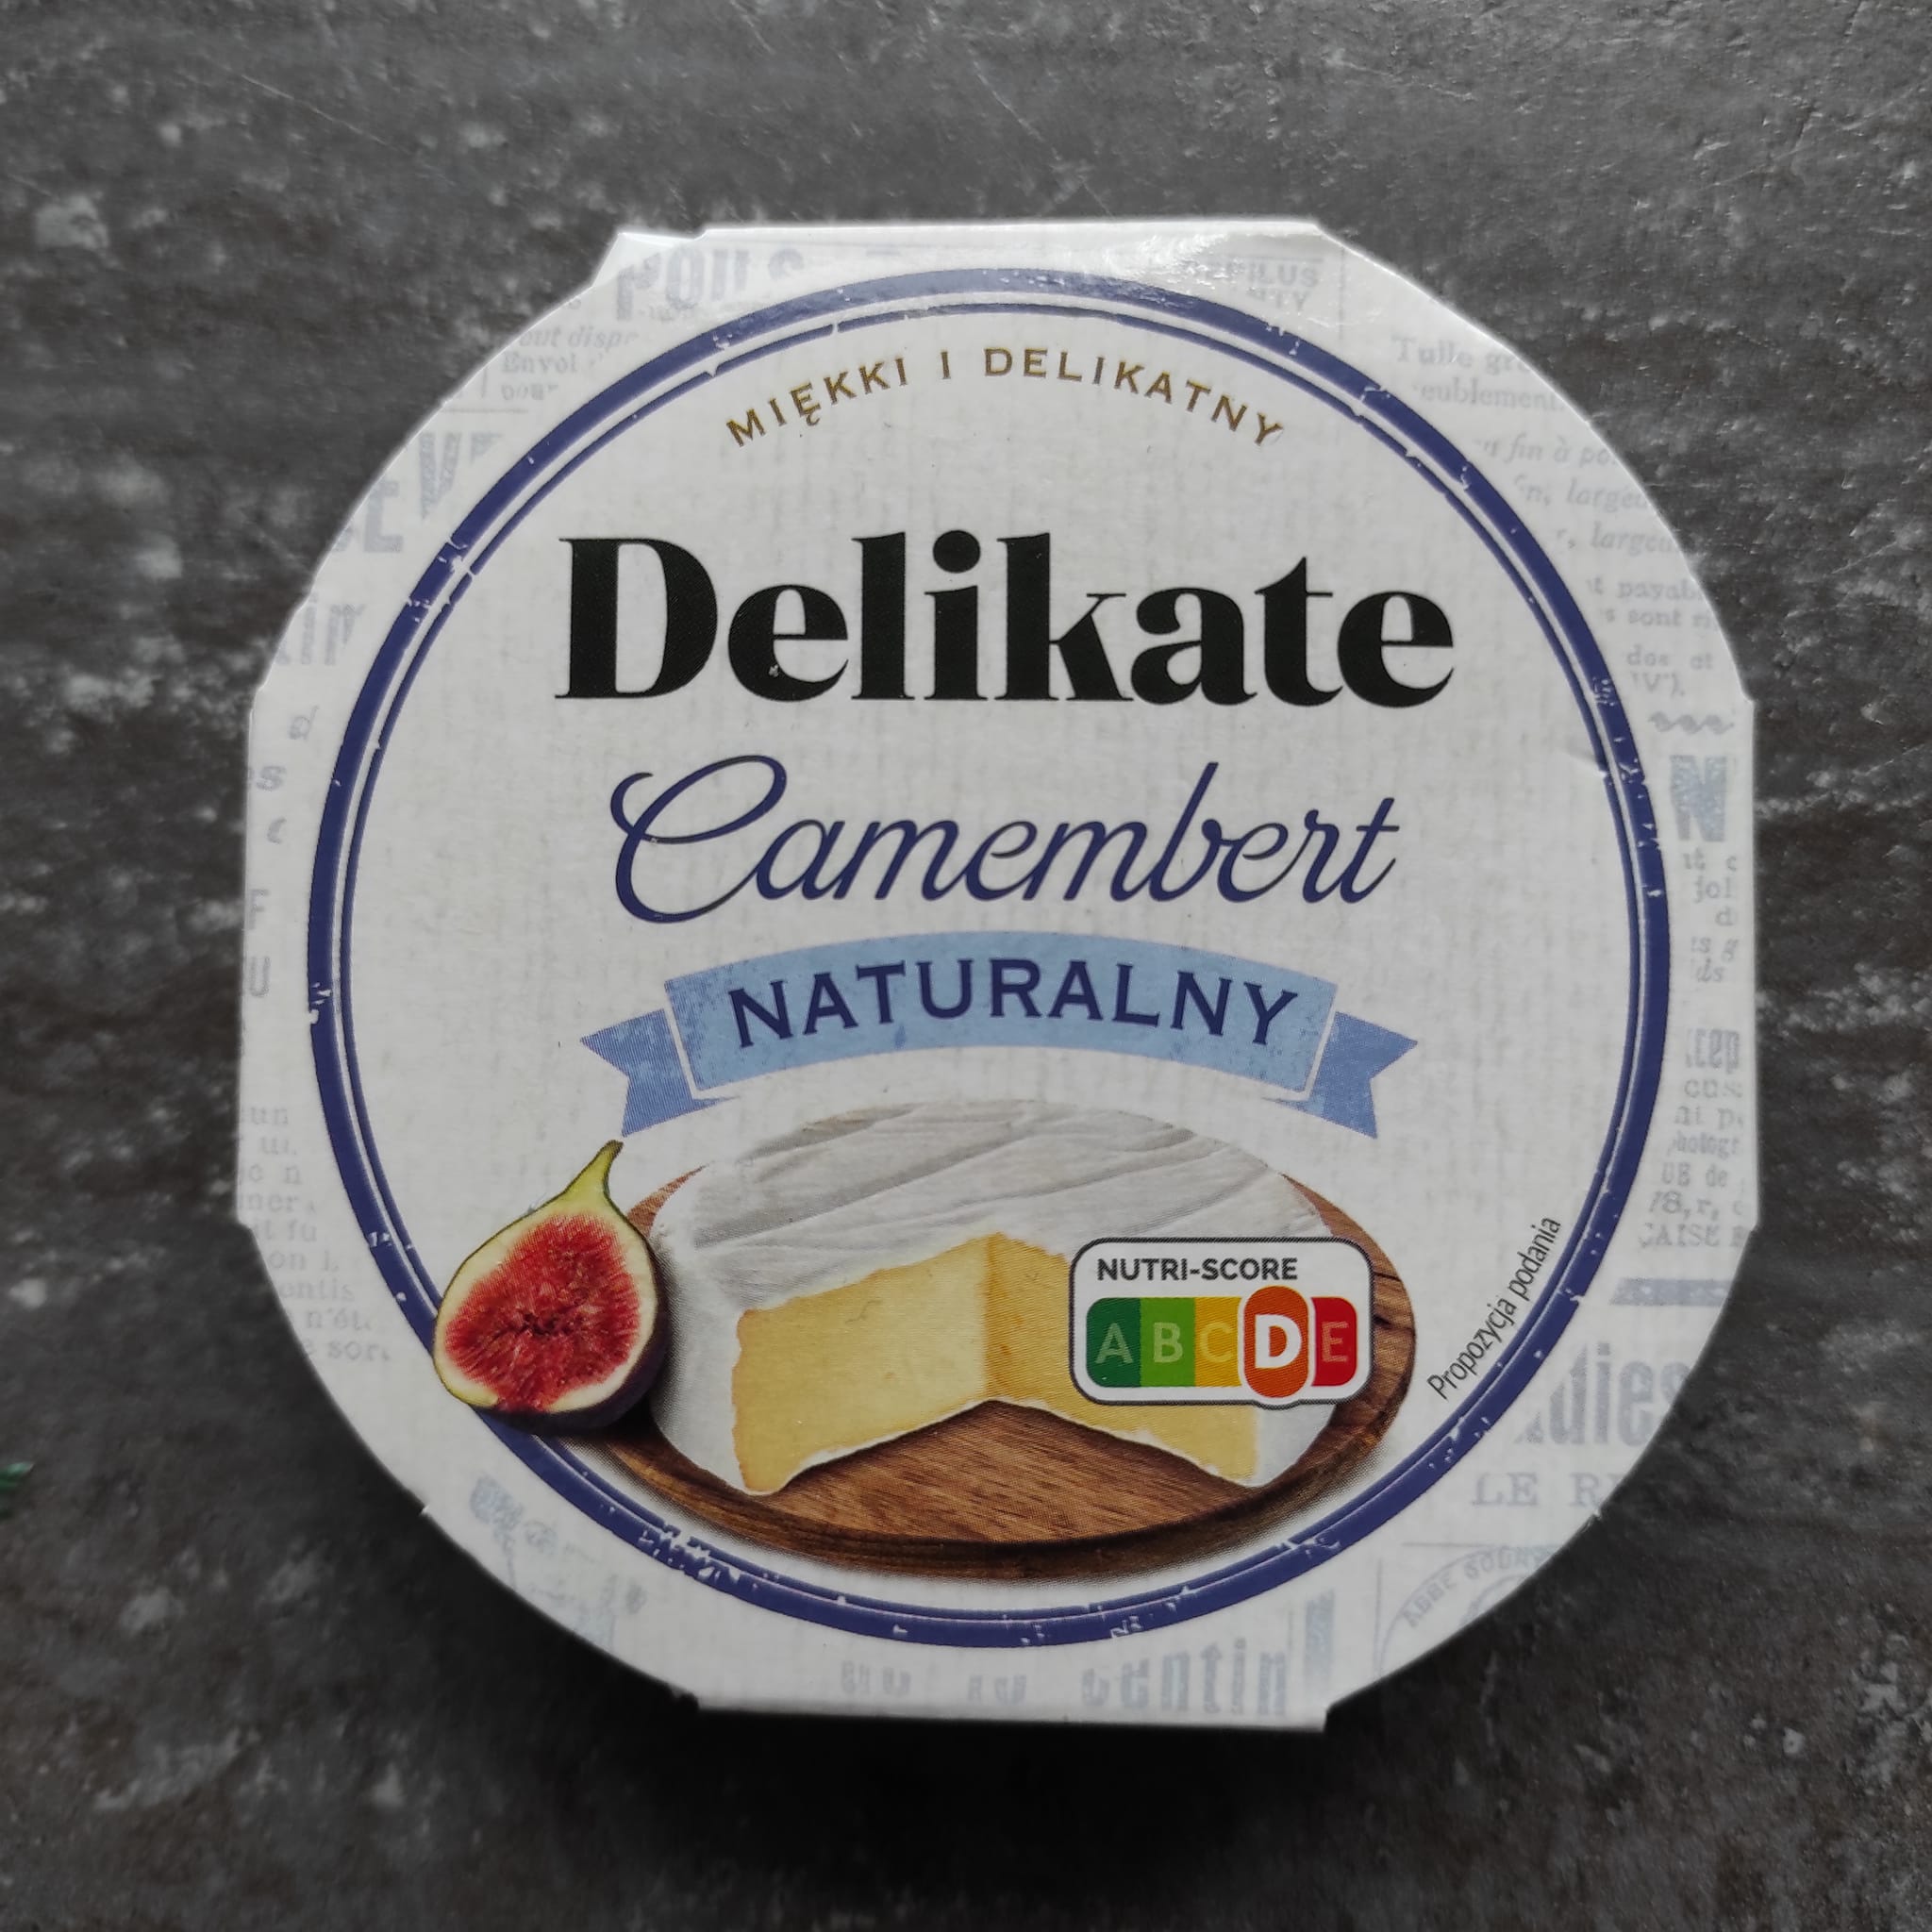 Serek camembert naturalny – Delikate 4 (1)